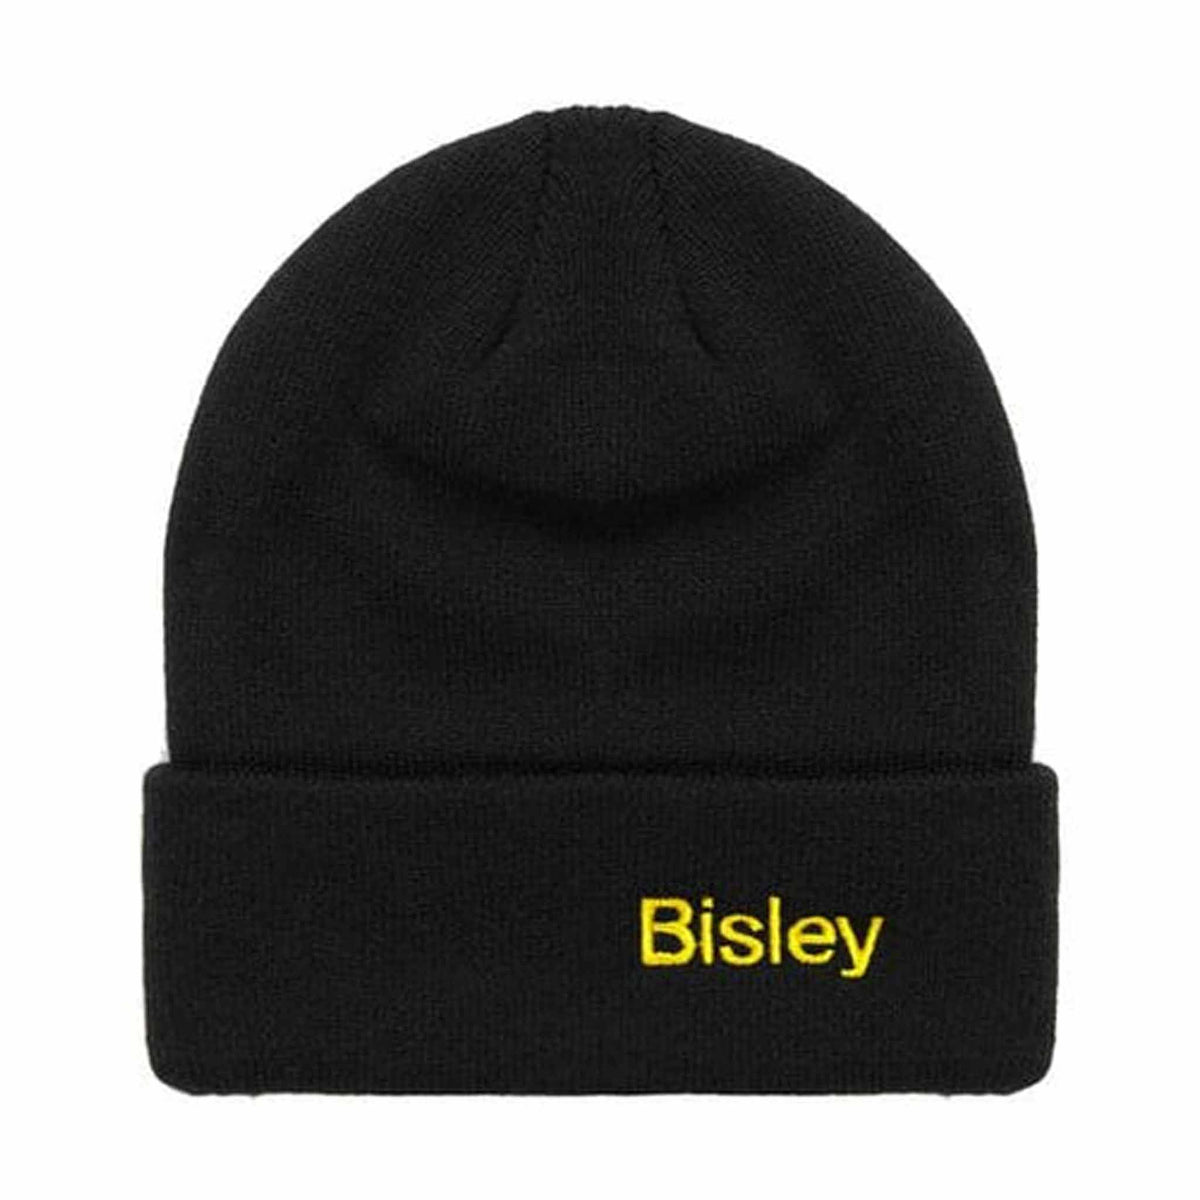 bisley beanie in black